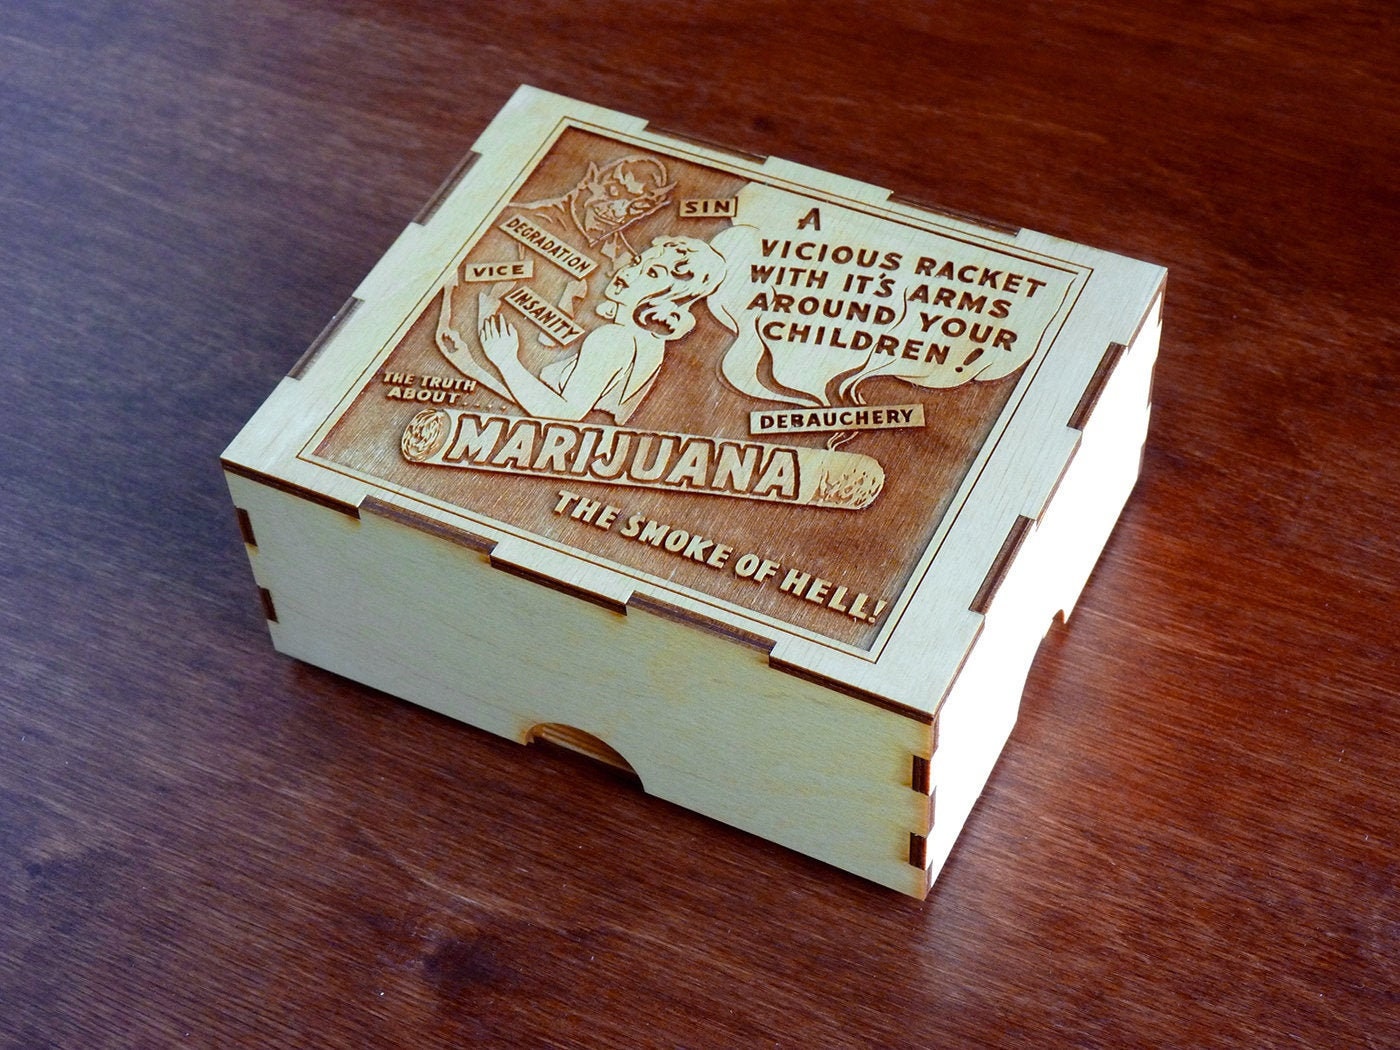 Vintage-Themed Weed Stash Box